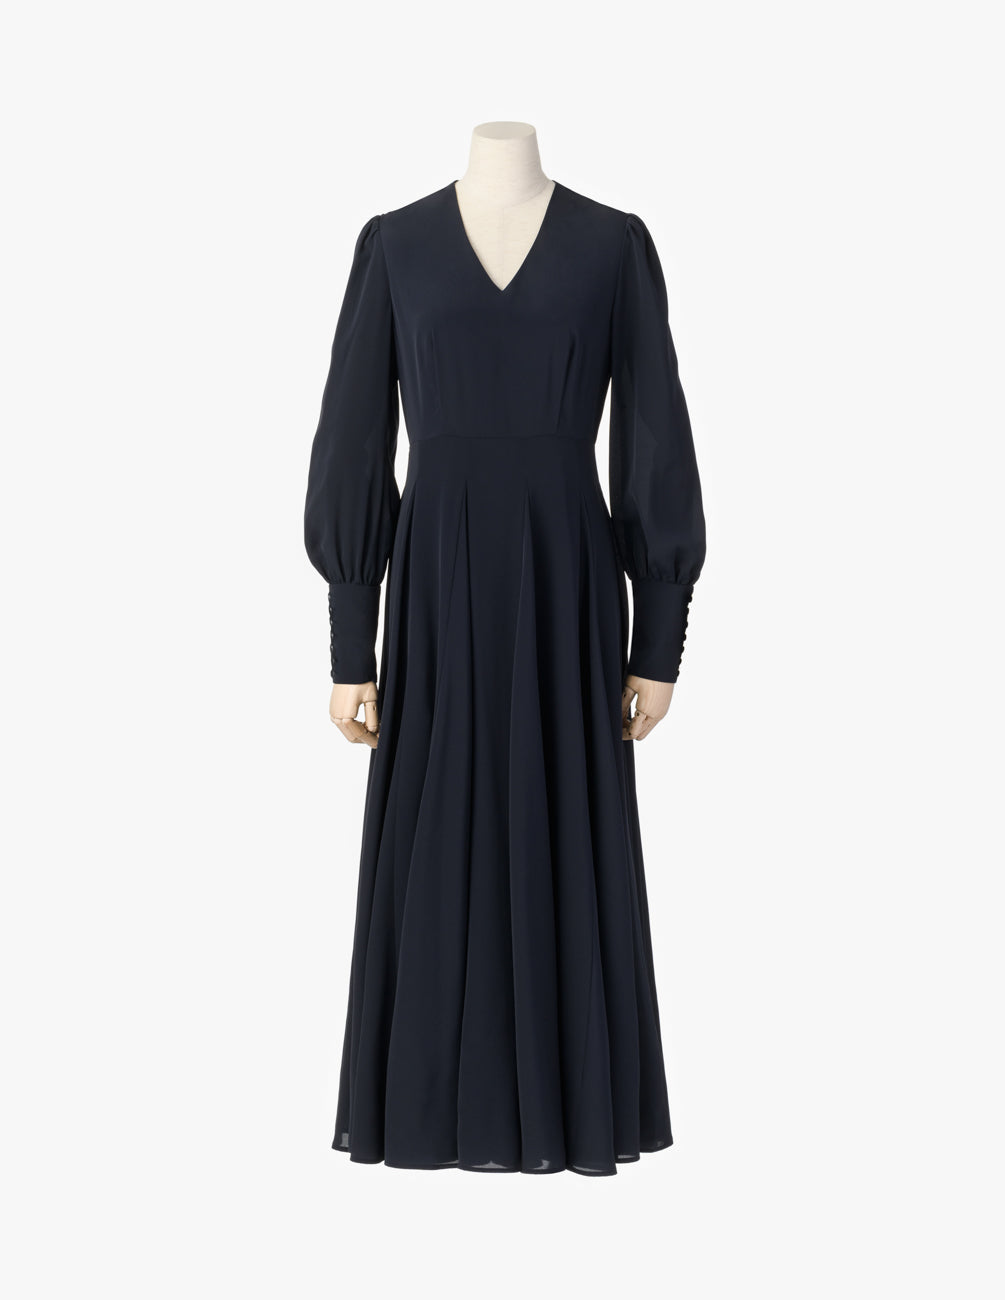 MARIHA(マリハ) 彗星のドレス(長袖) Navy シティードレスコレクション 